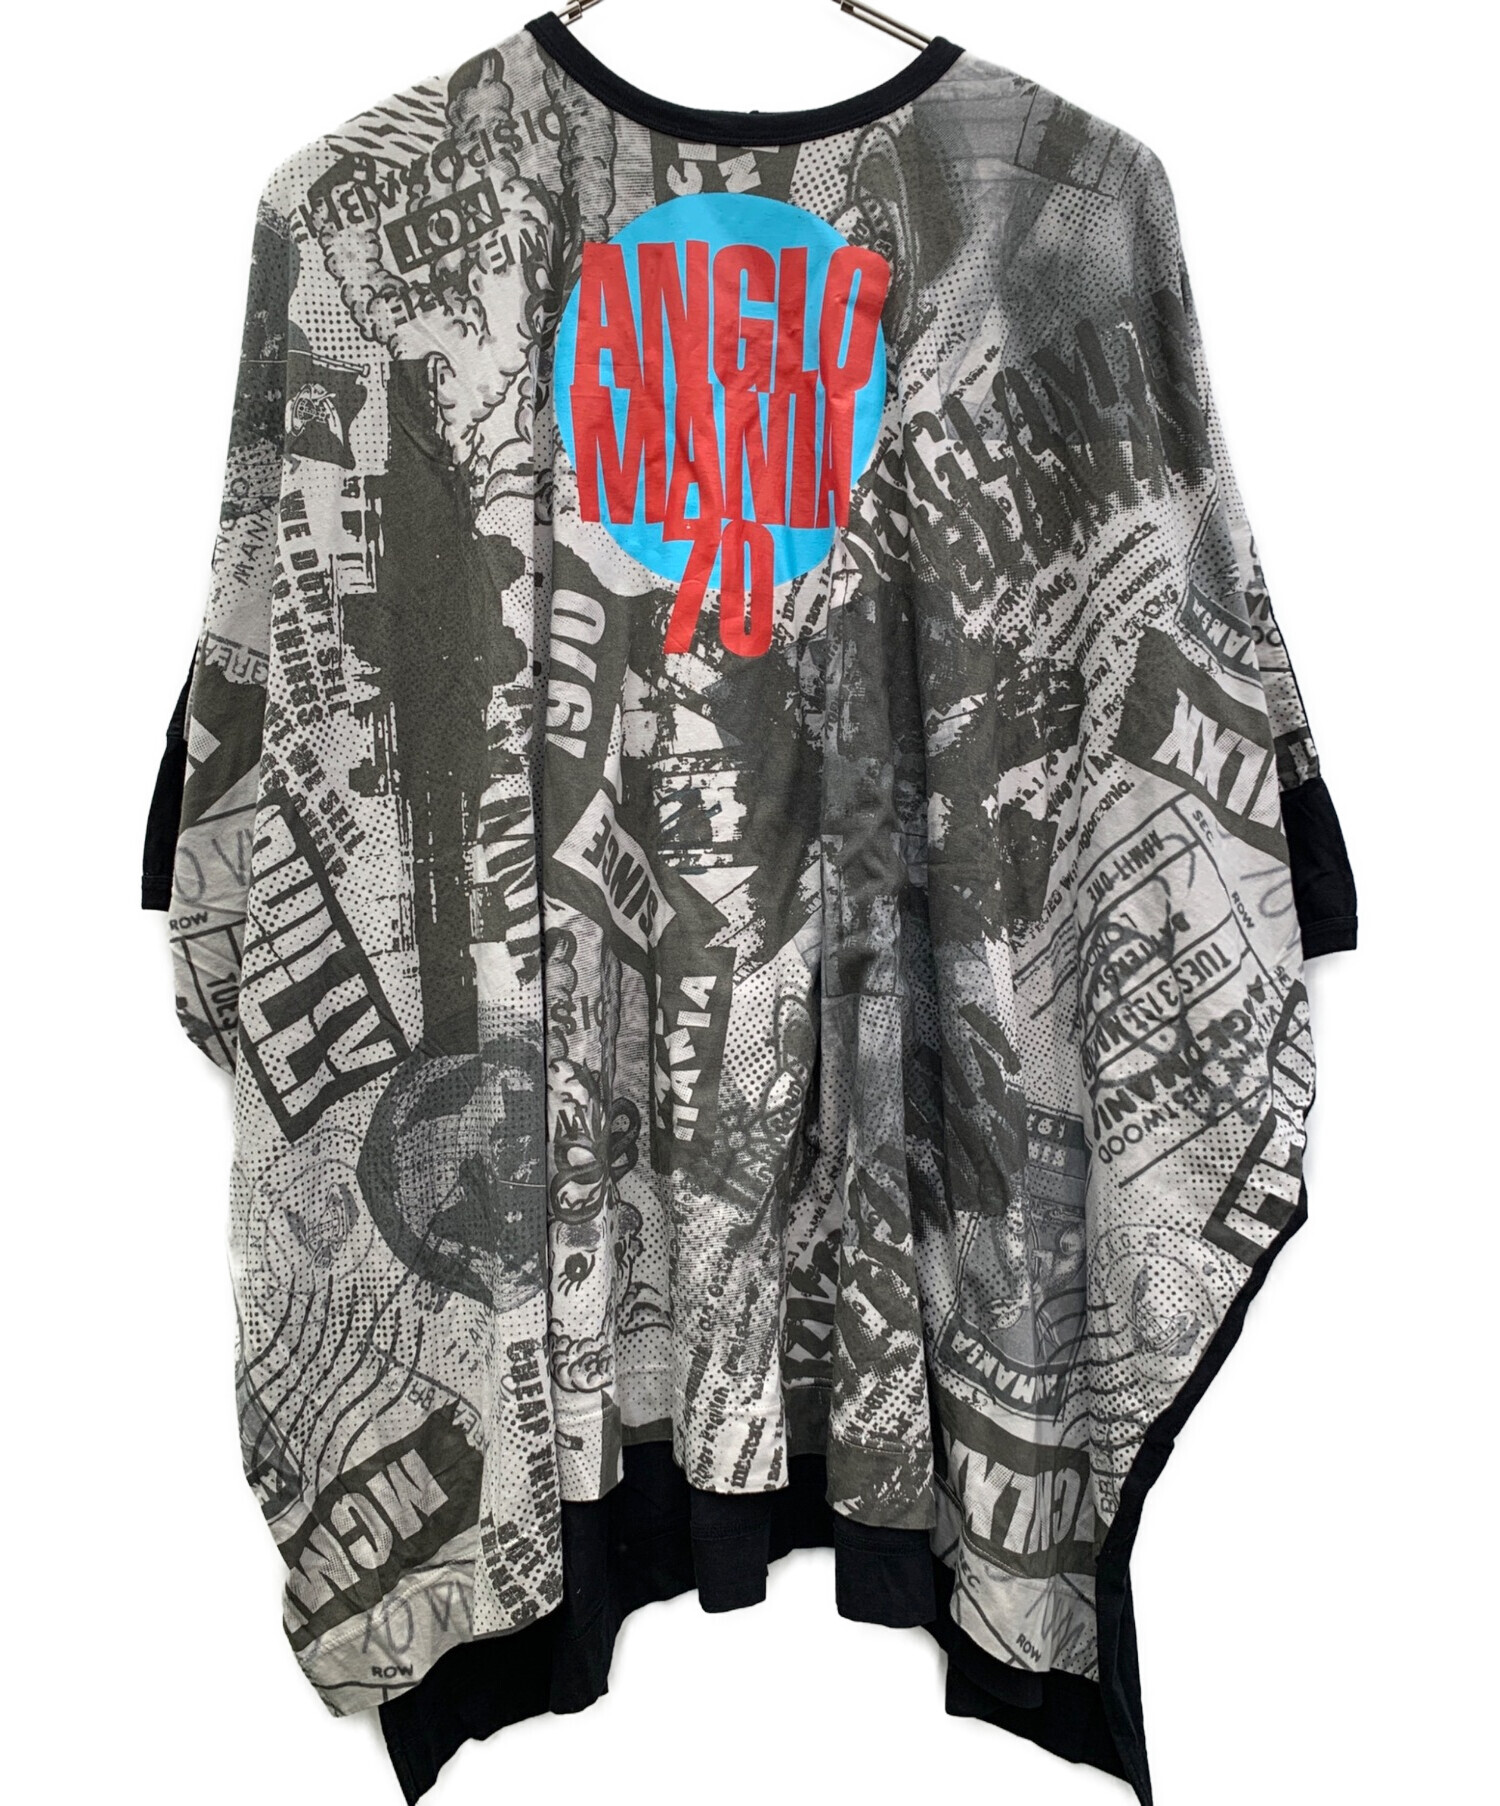 Vivienne Westwood Anglomaniaソールヒール形フラット